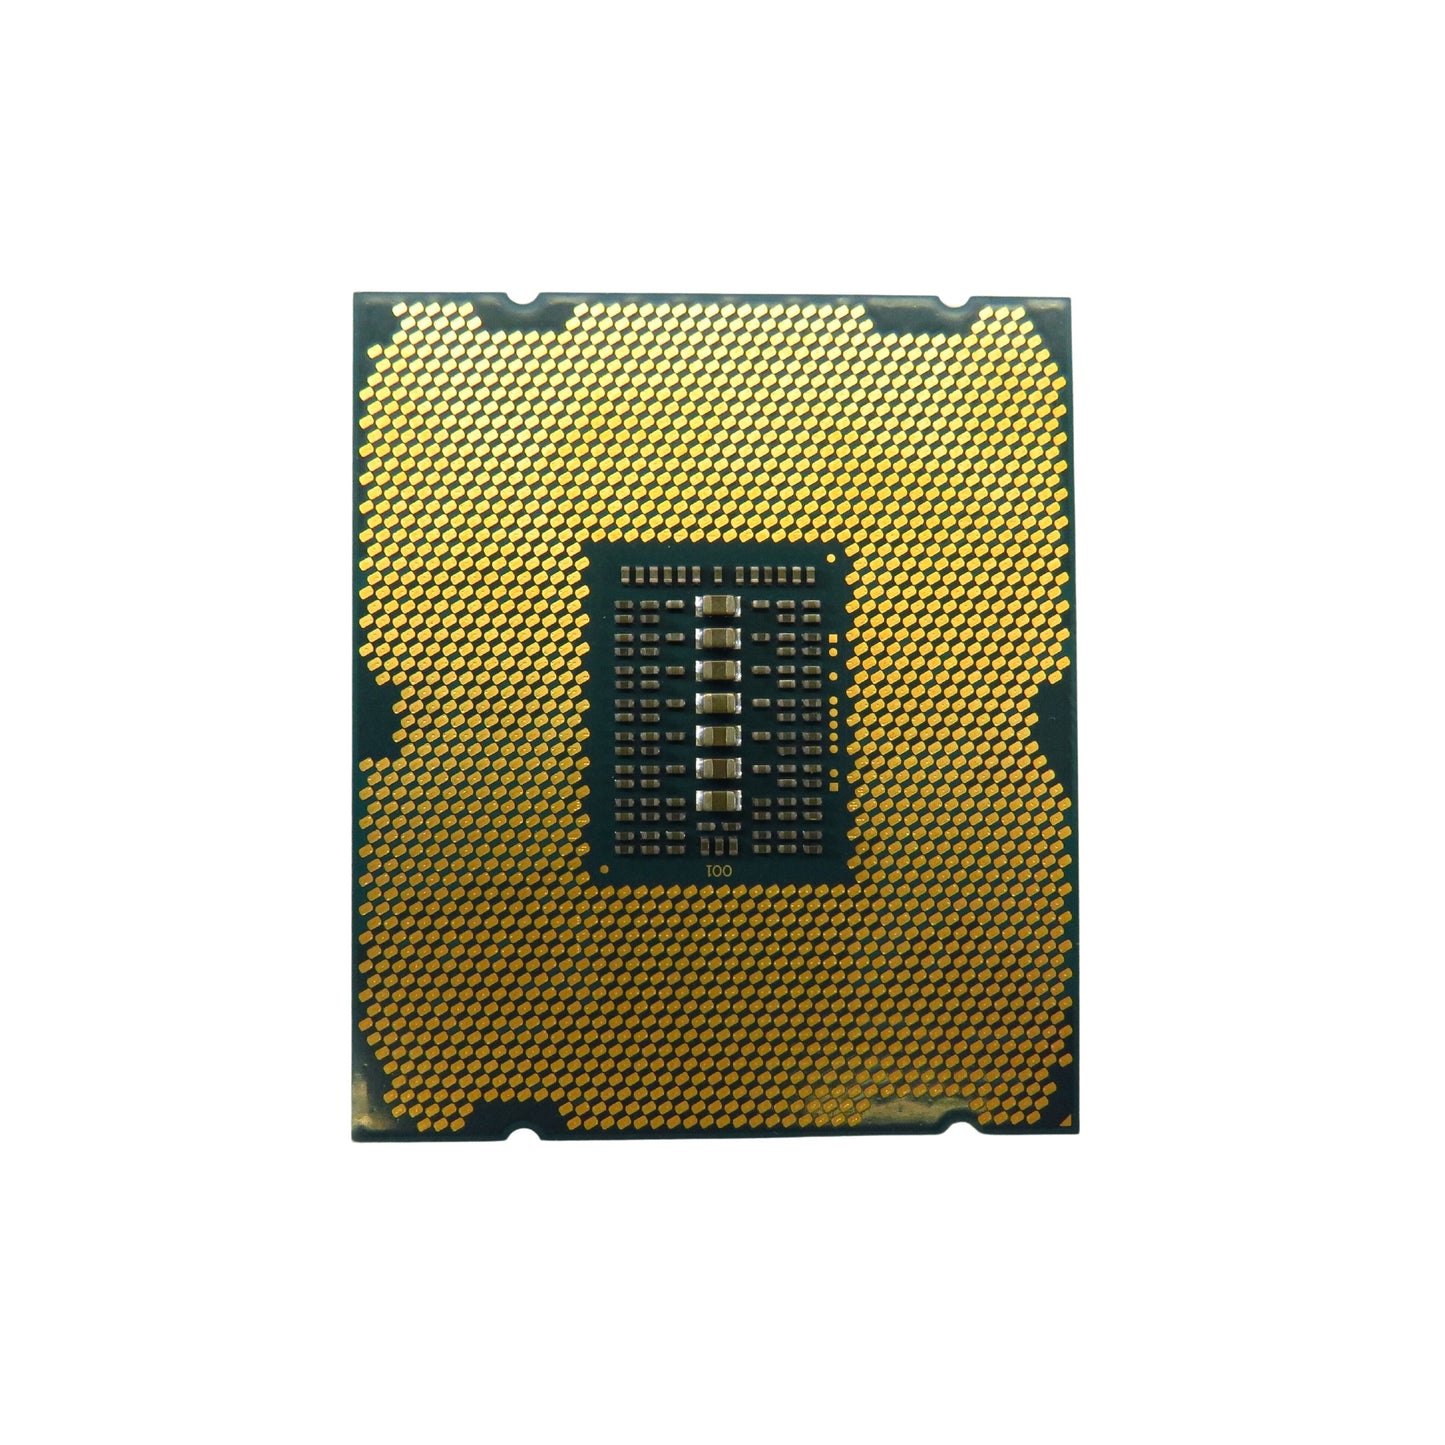 Intel SR1A8 Xeon E5-2650V2 2.6GHz 8 Core LGA2011 Server CPU Processor (Refurbished)